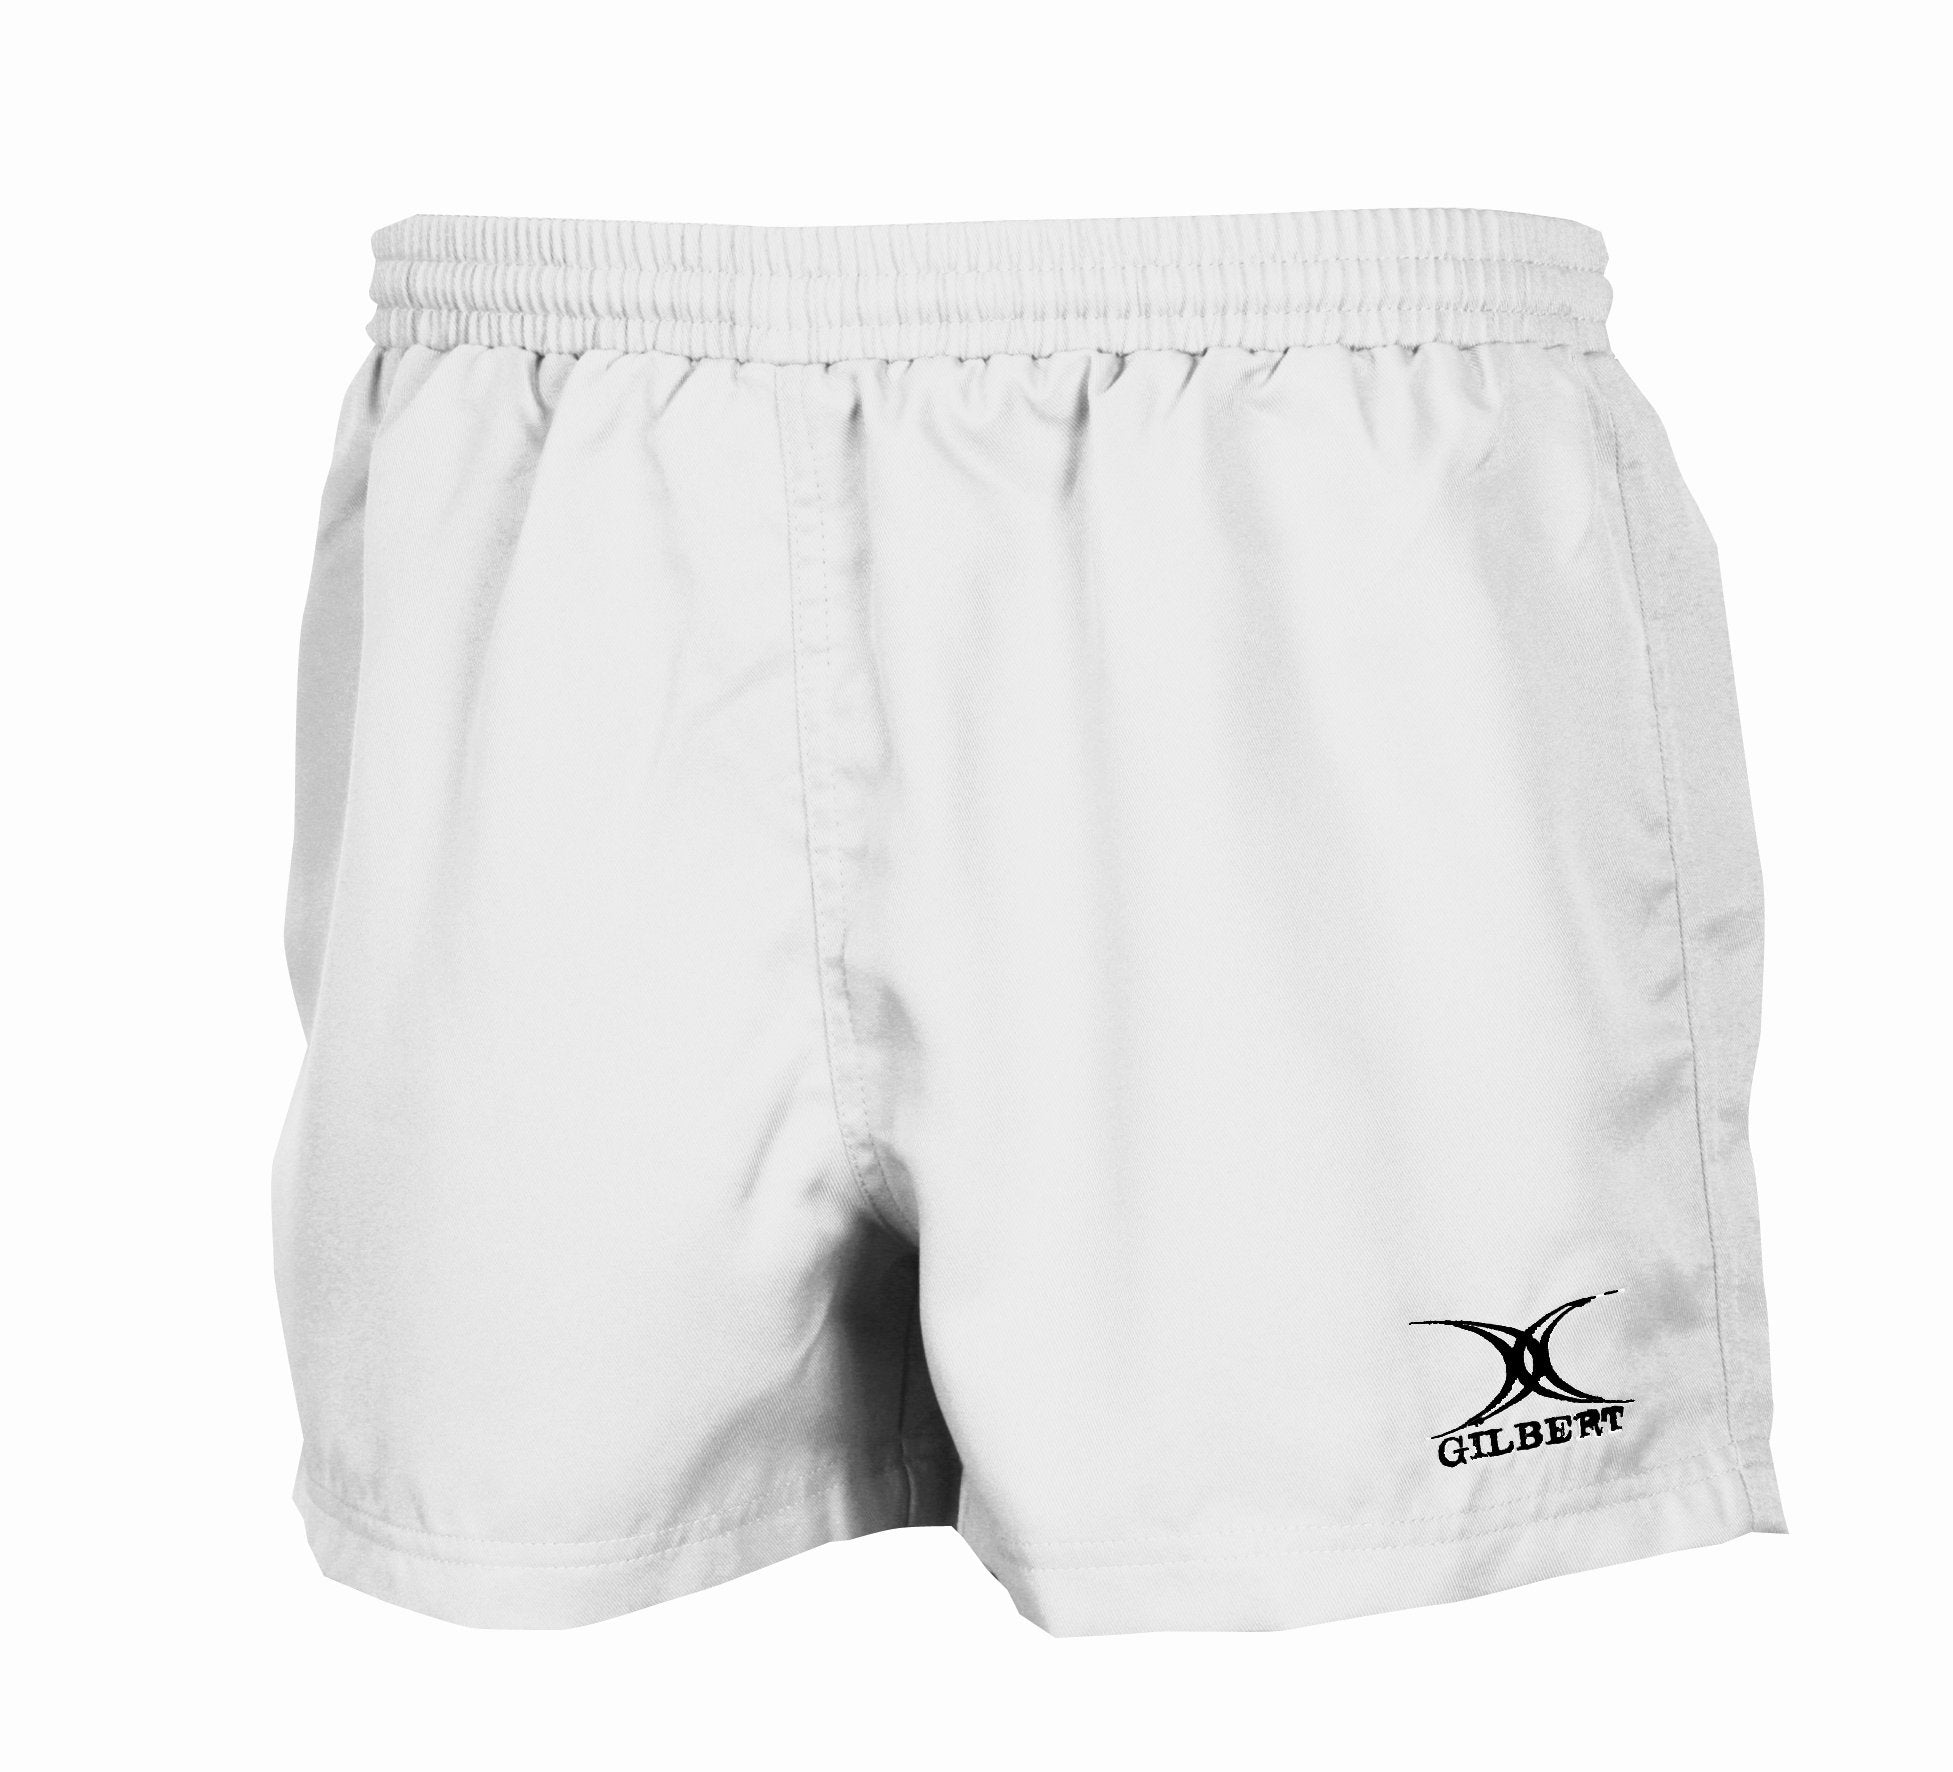 Junior Saracen Match Shorts